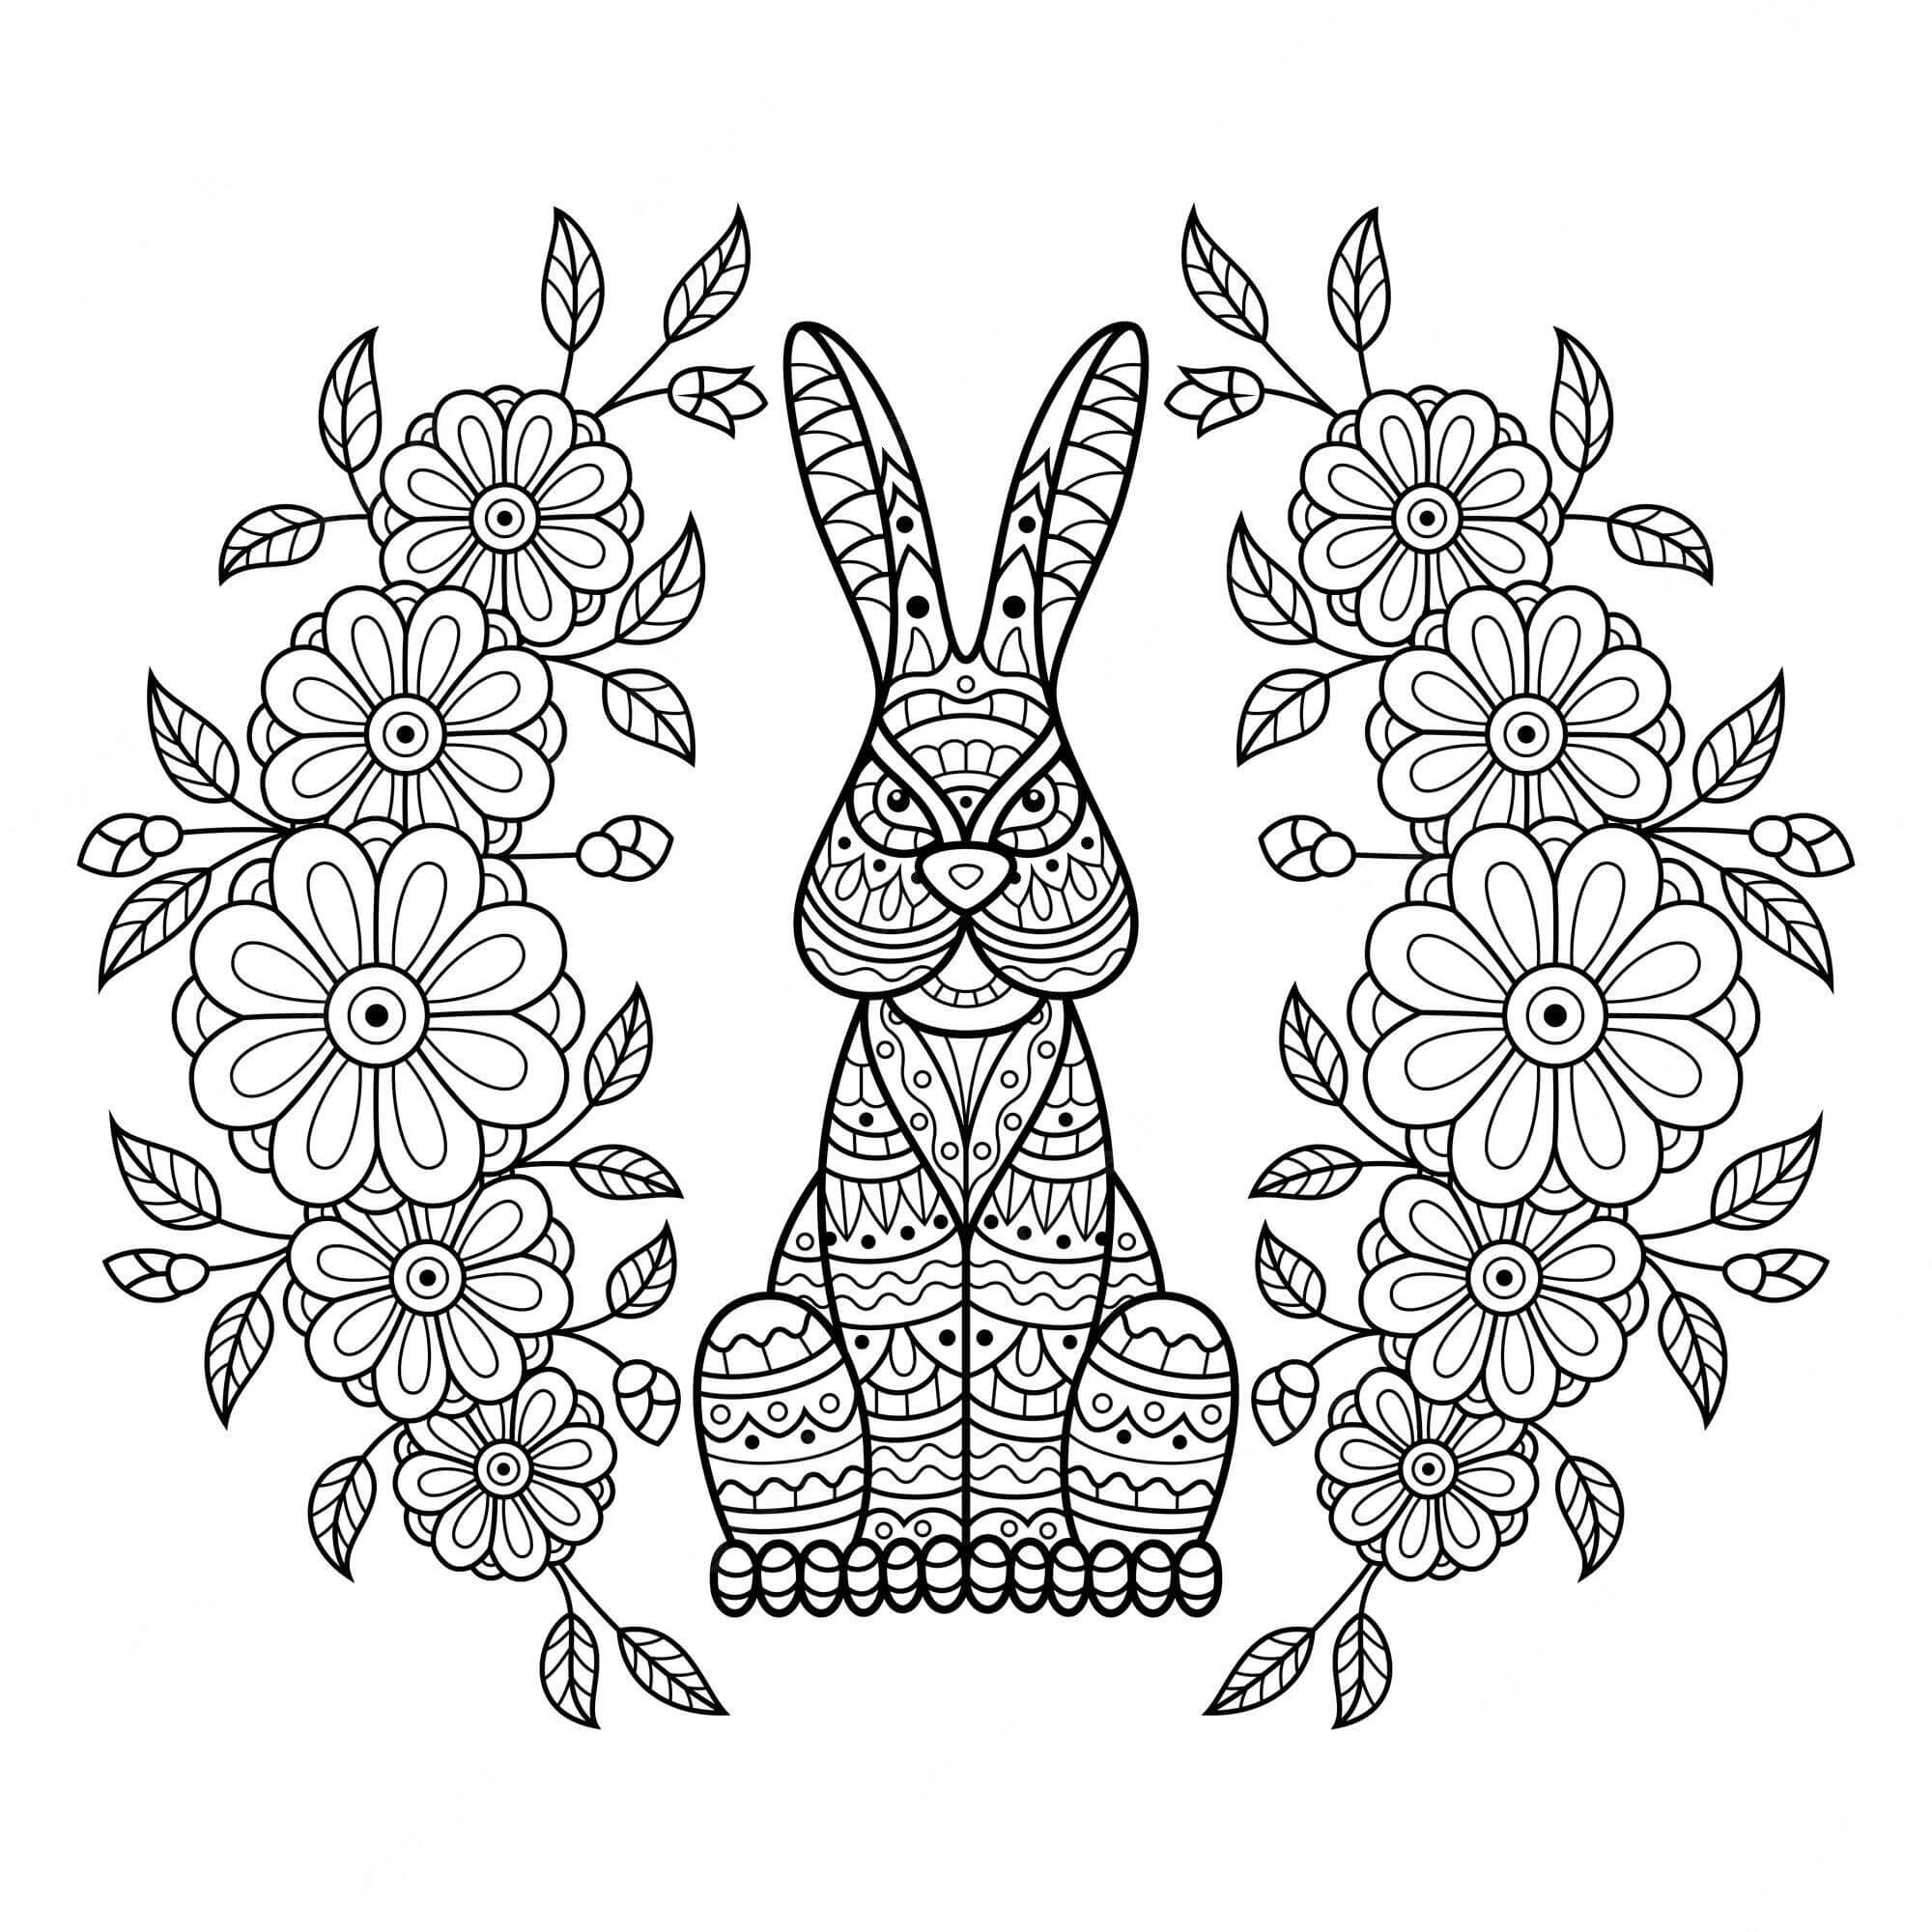 Mandala Rabbit With Flowers Coloring Page - Sheet 1 Mandalas